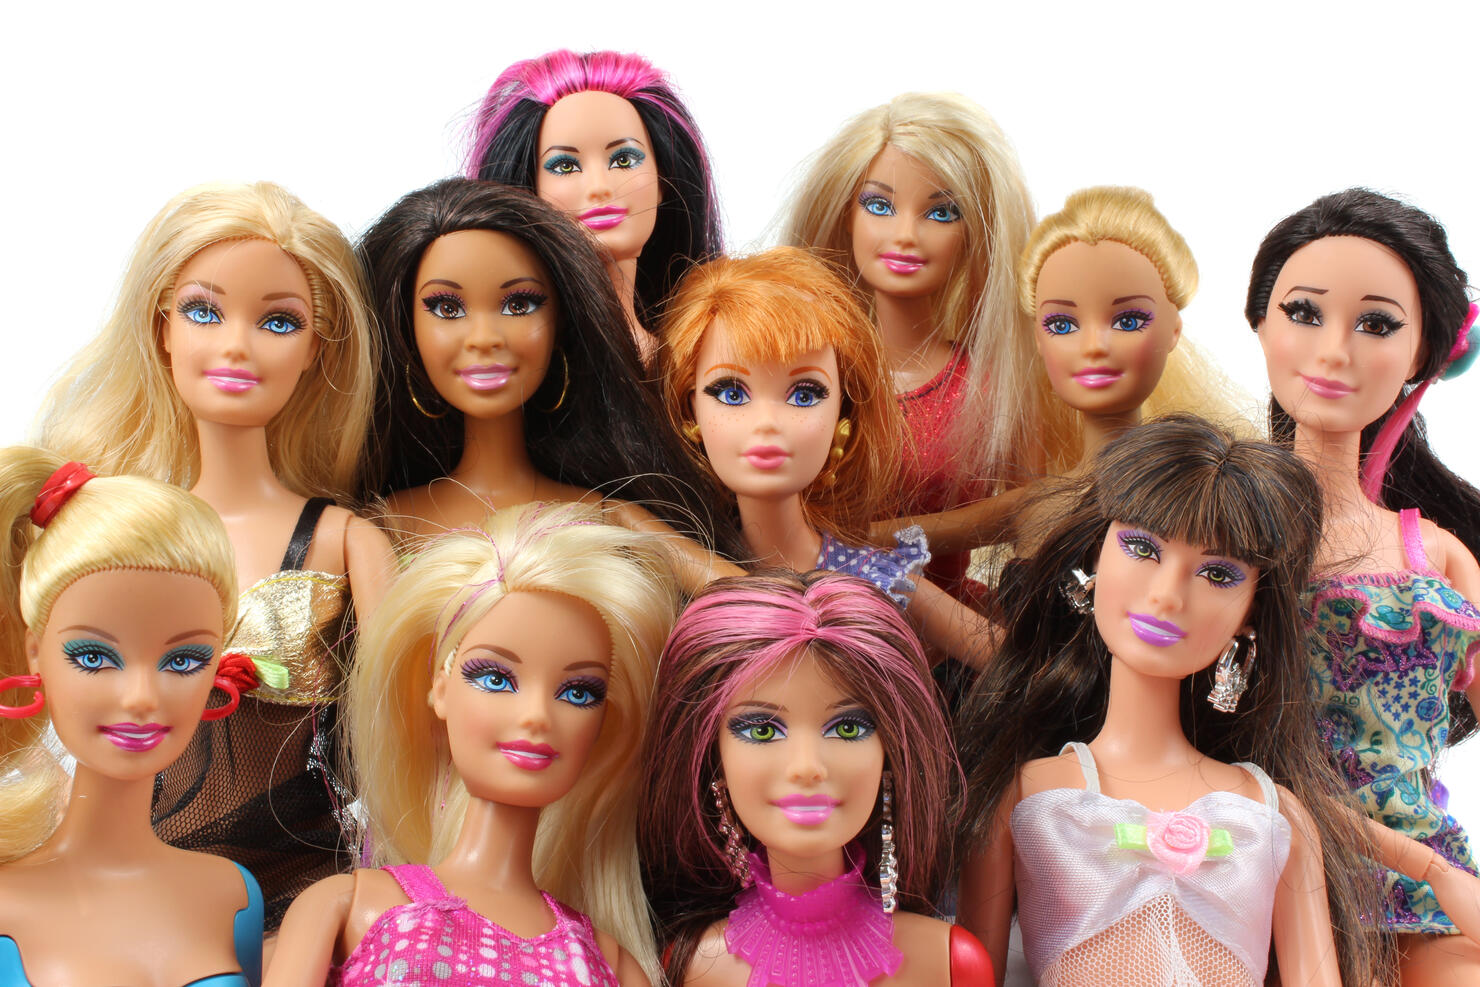 Barbie Doll Group shot.